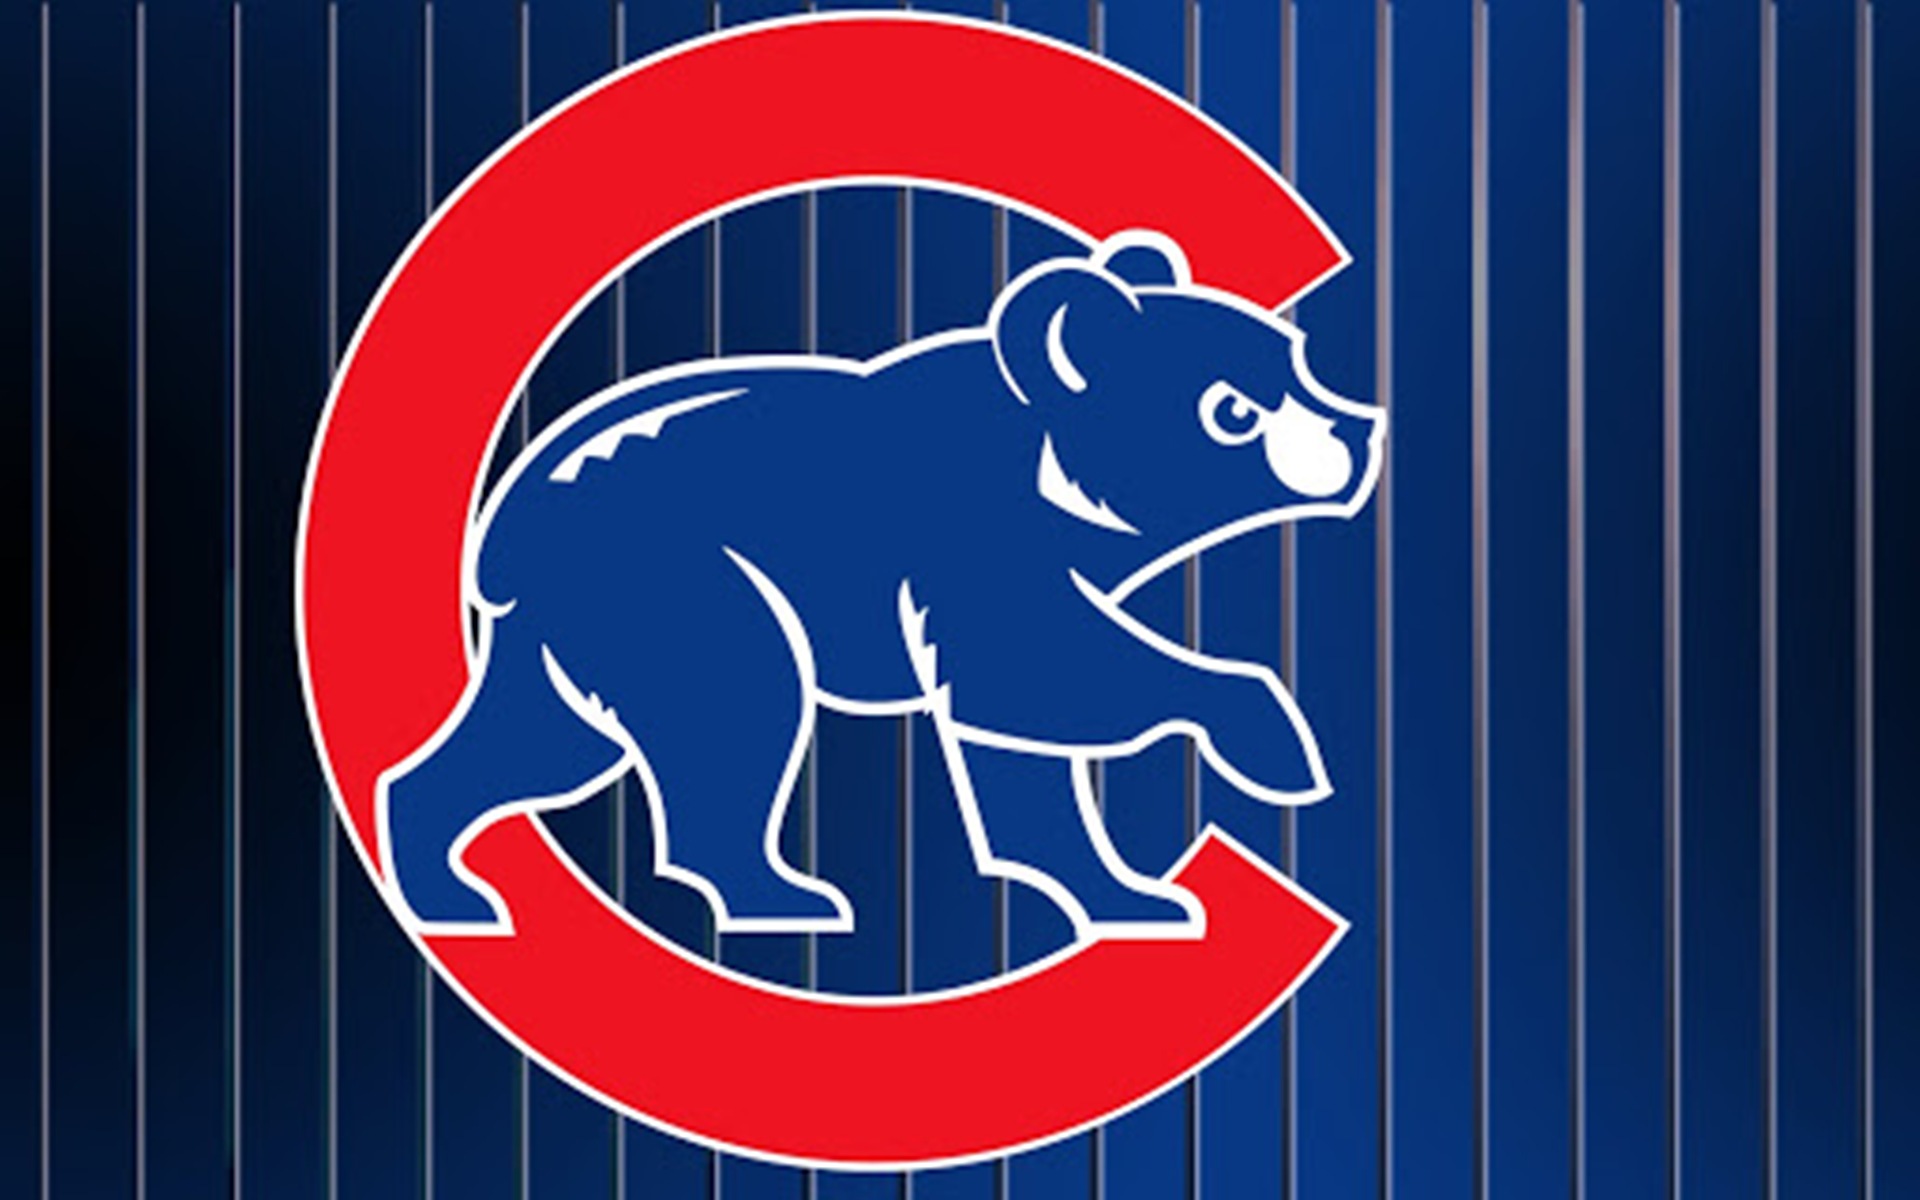 Chicago Cubs wallpaper 1920x1080 69228